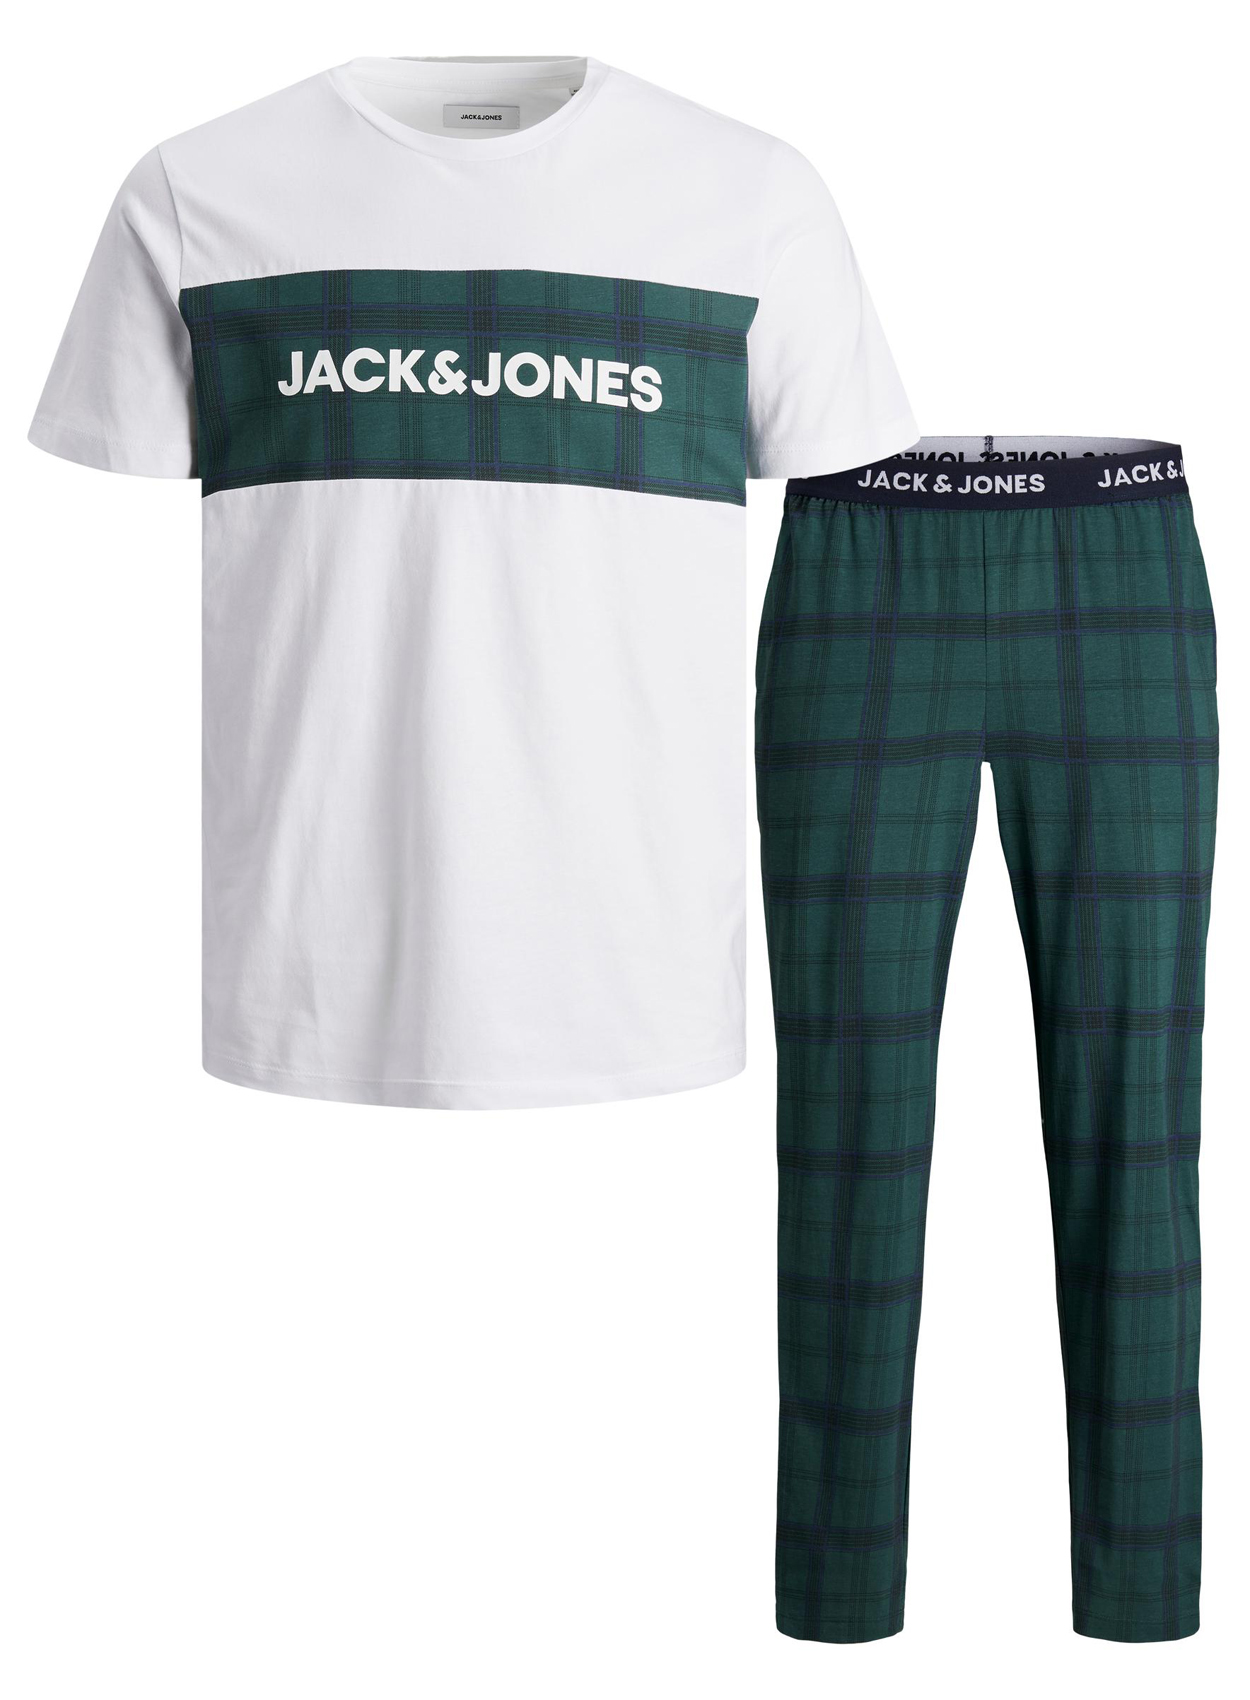 pyjama jack & jones jactrain en coton : tee-shirt blanc floqué et pantalon vert sapin à carreaux